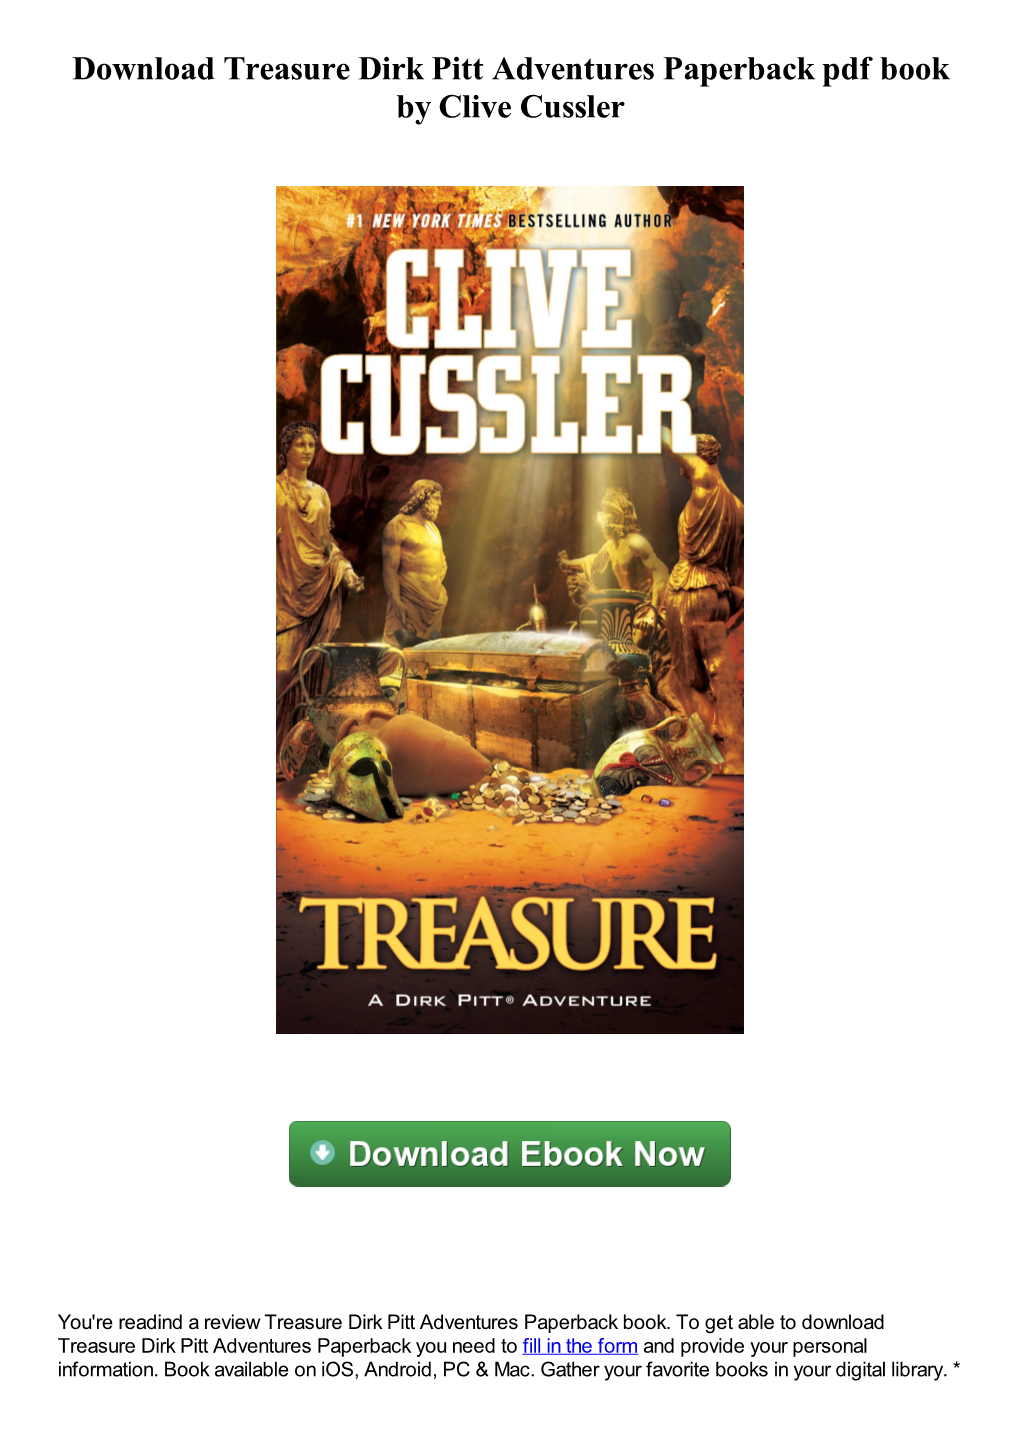 Download Treasure Dirk Pitt Adventures Paperback Pdf Book by Clive Cussler